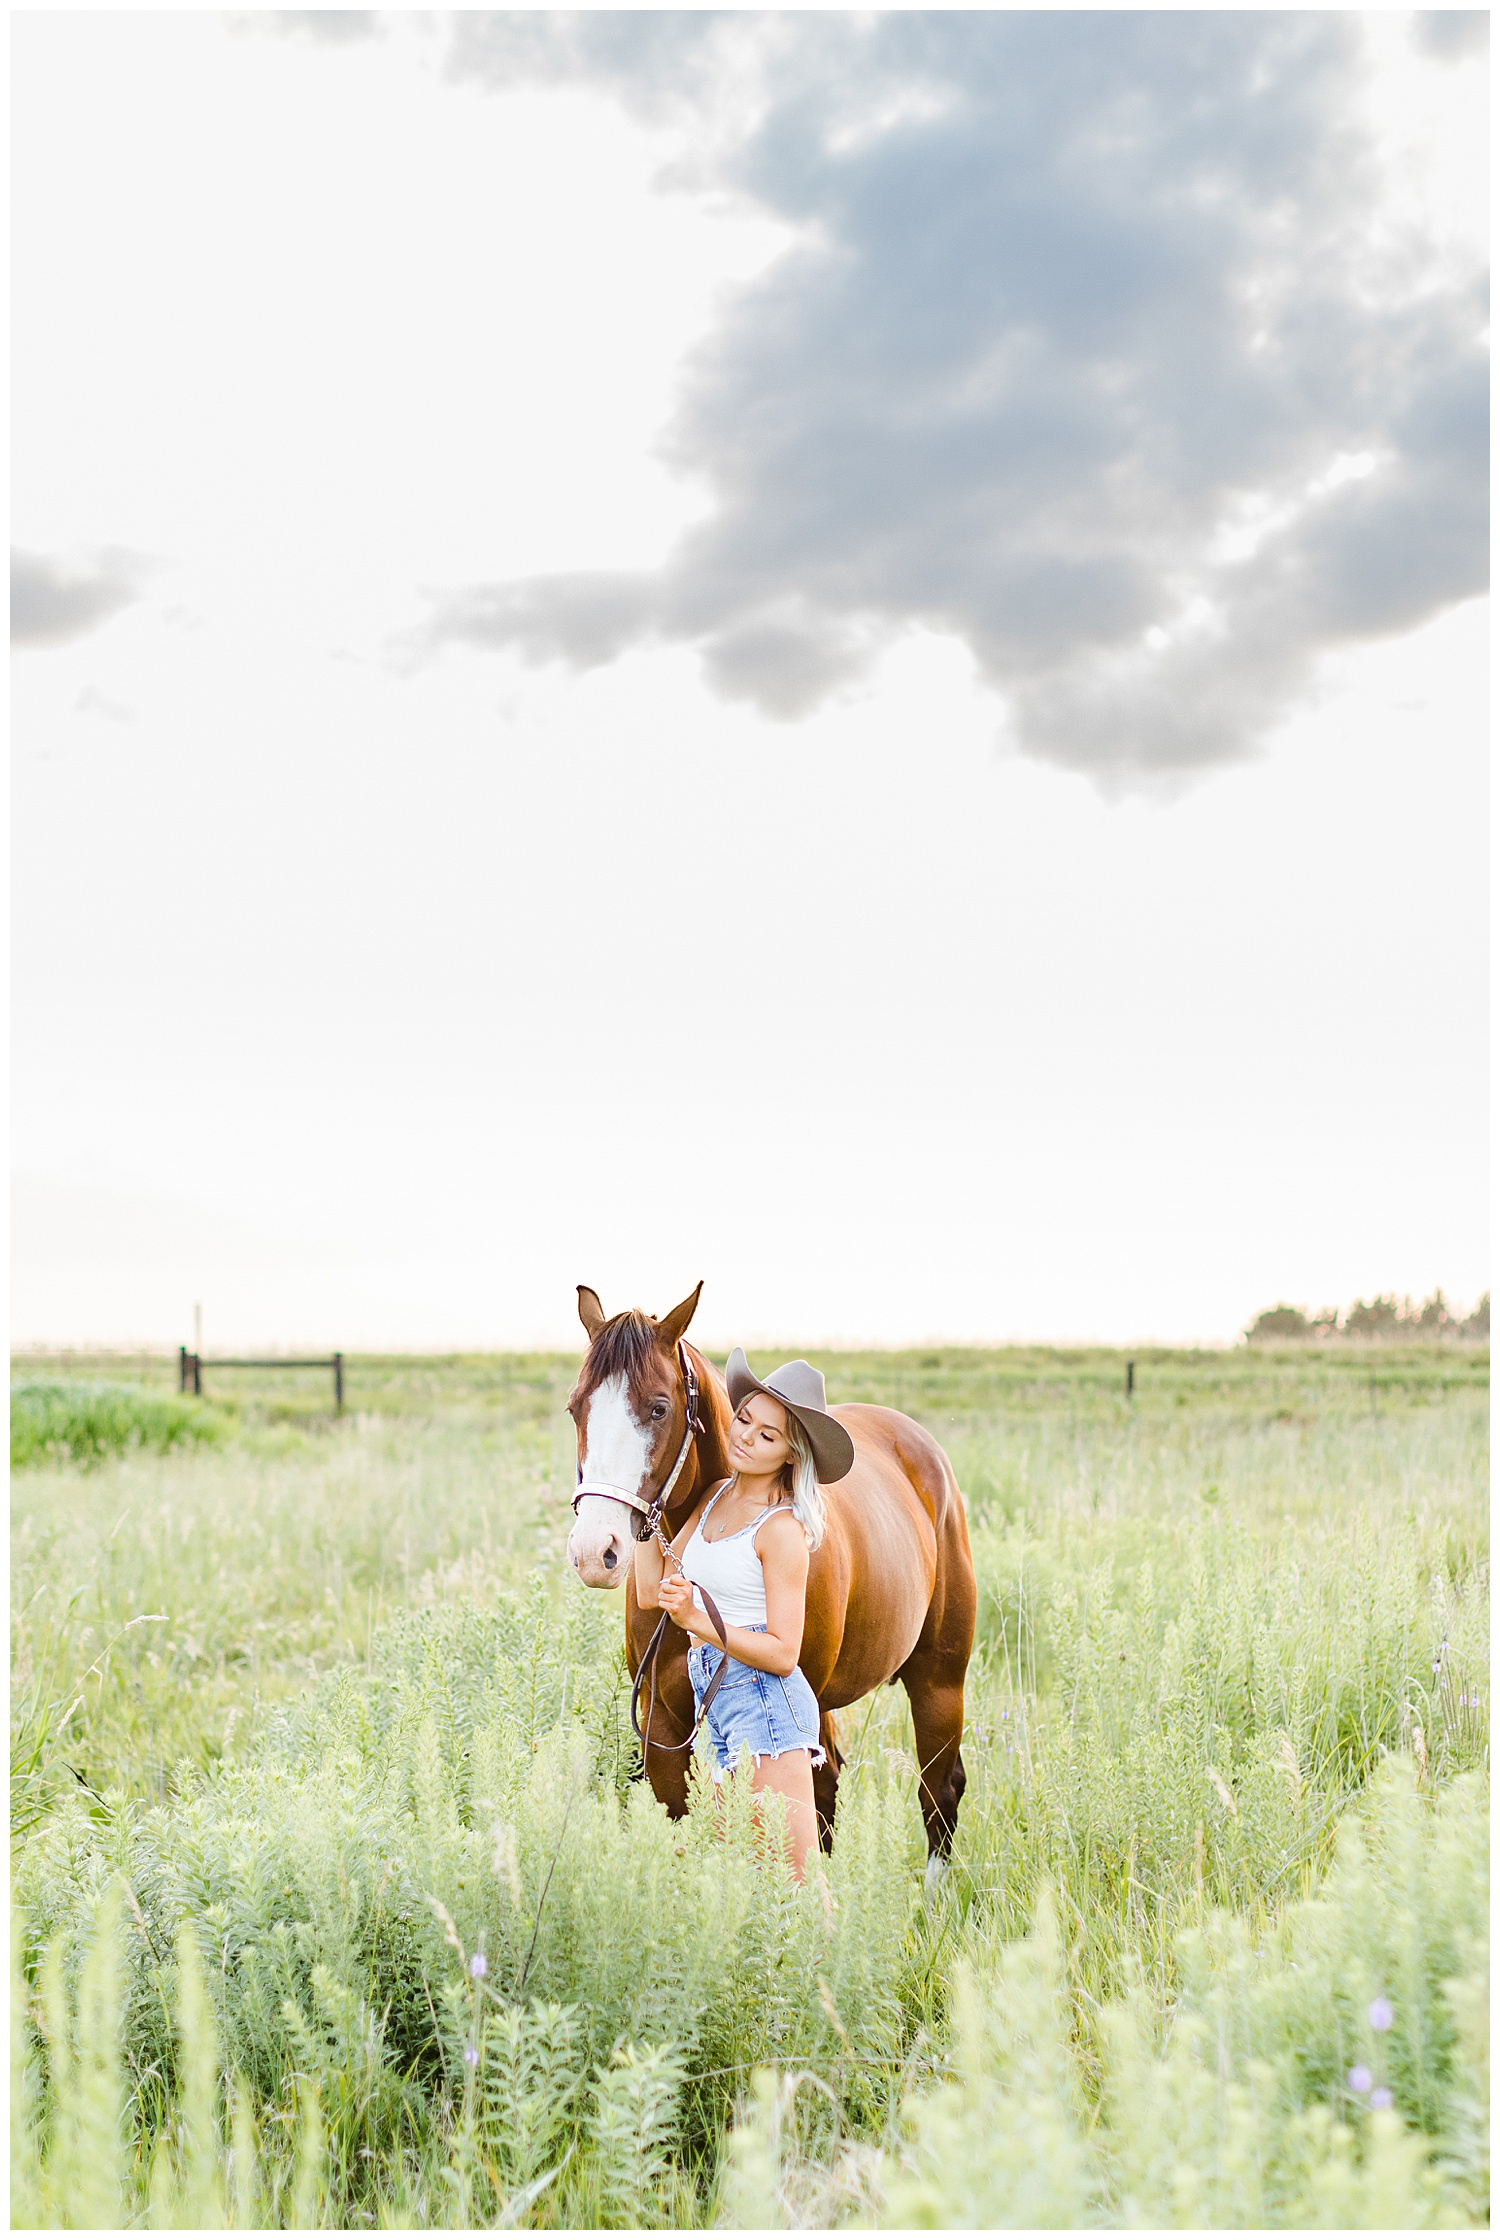 Addison snuggles Miss Flirty the horse in a grassy field | CB Studio